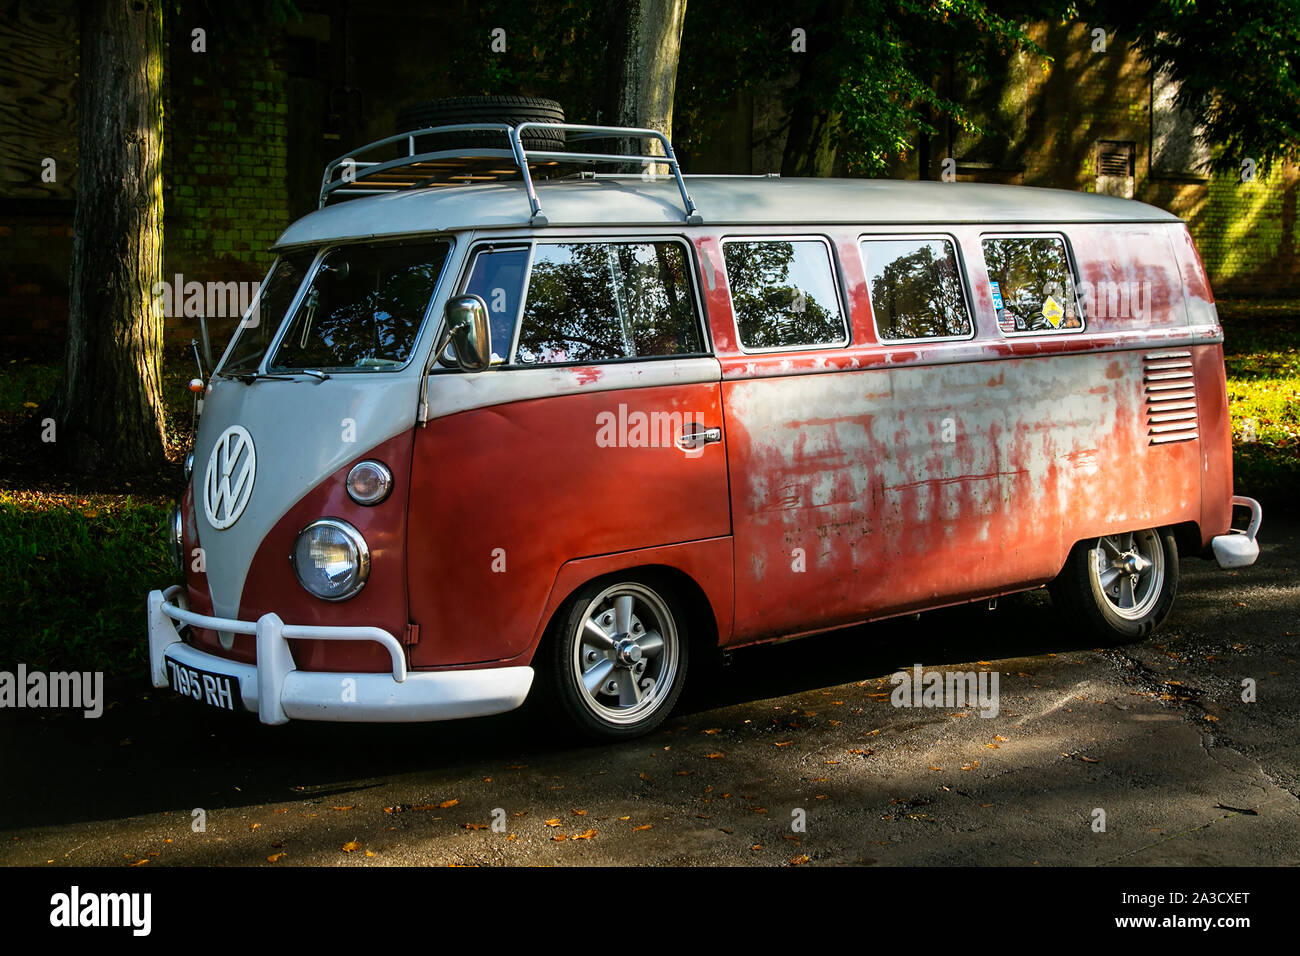 Van minivan transportation stock photography images - Alamy